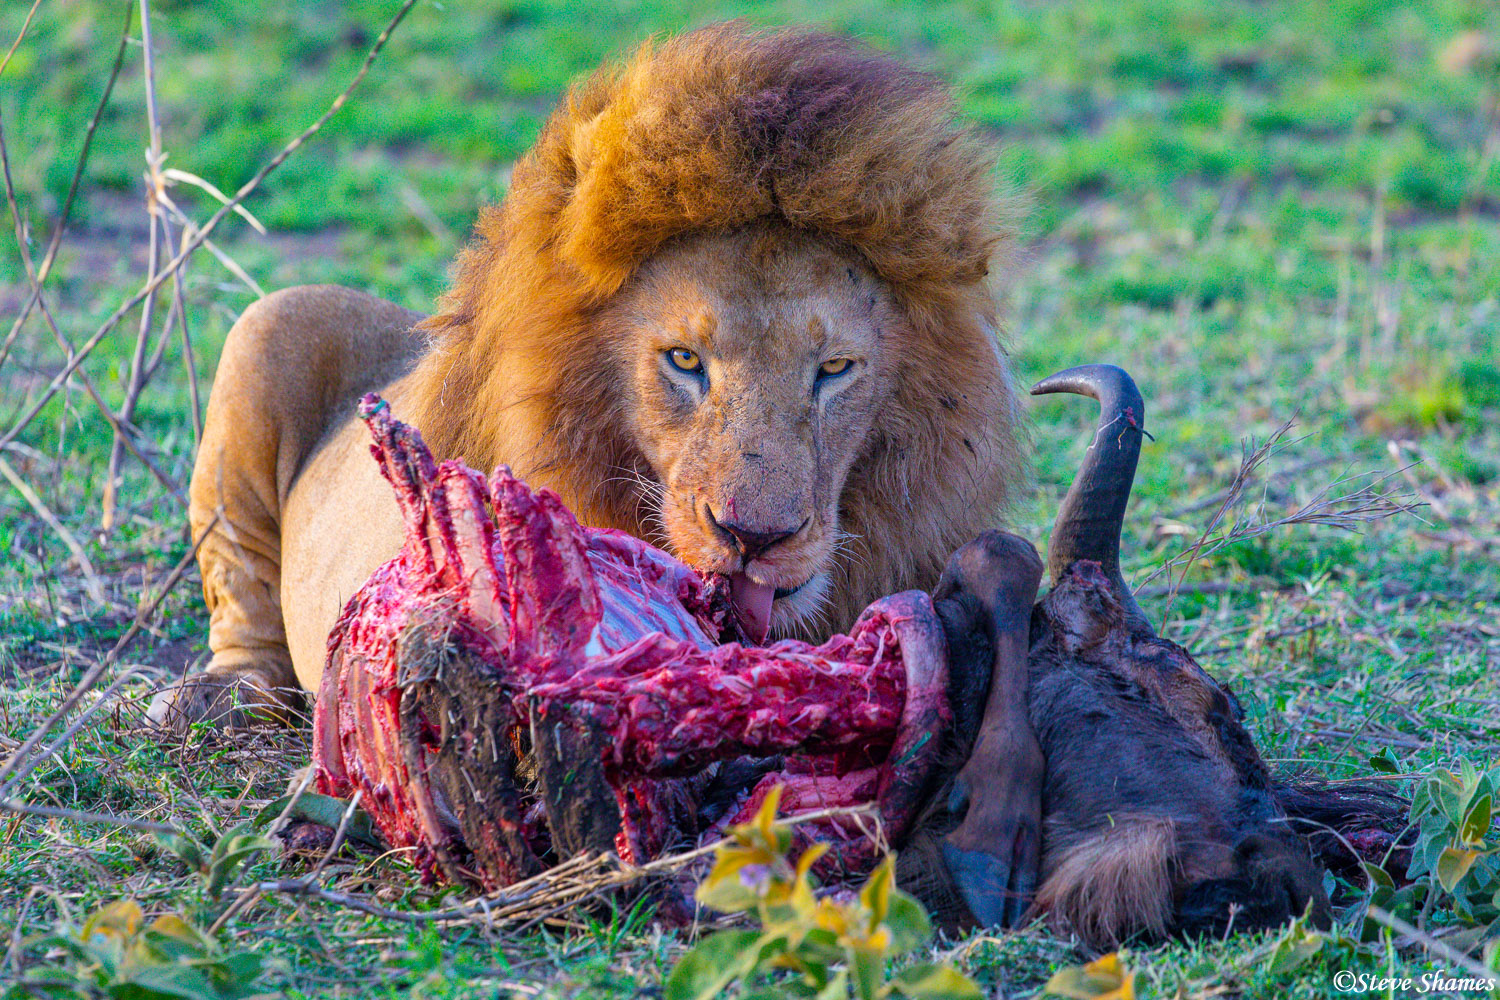 A lion finishing off a wildebeest carcass.